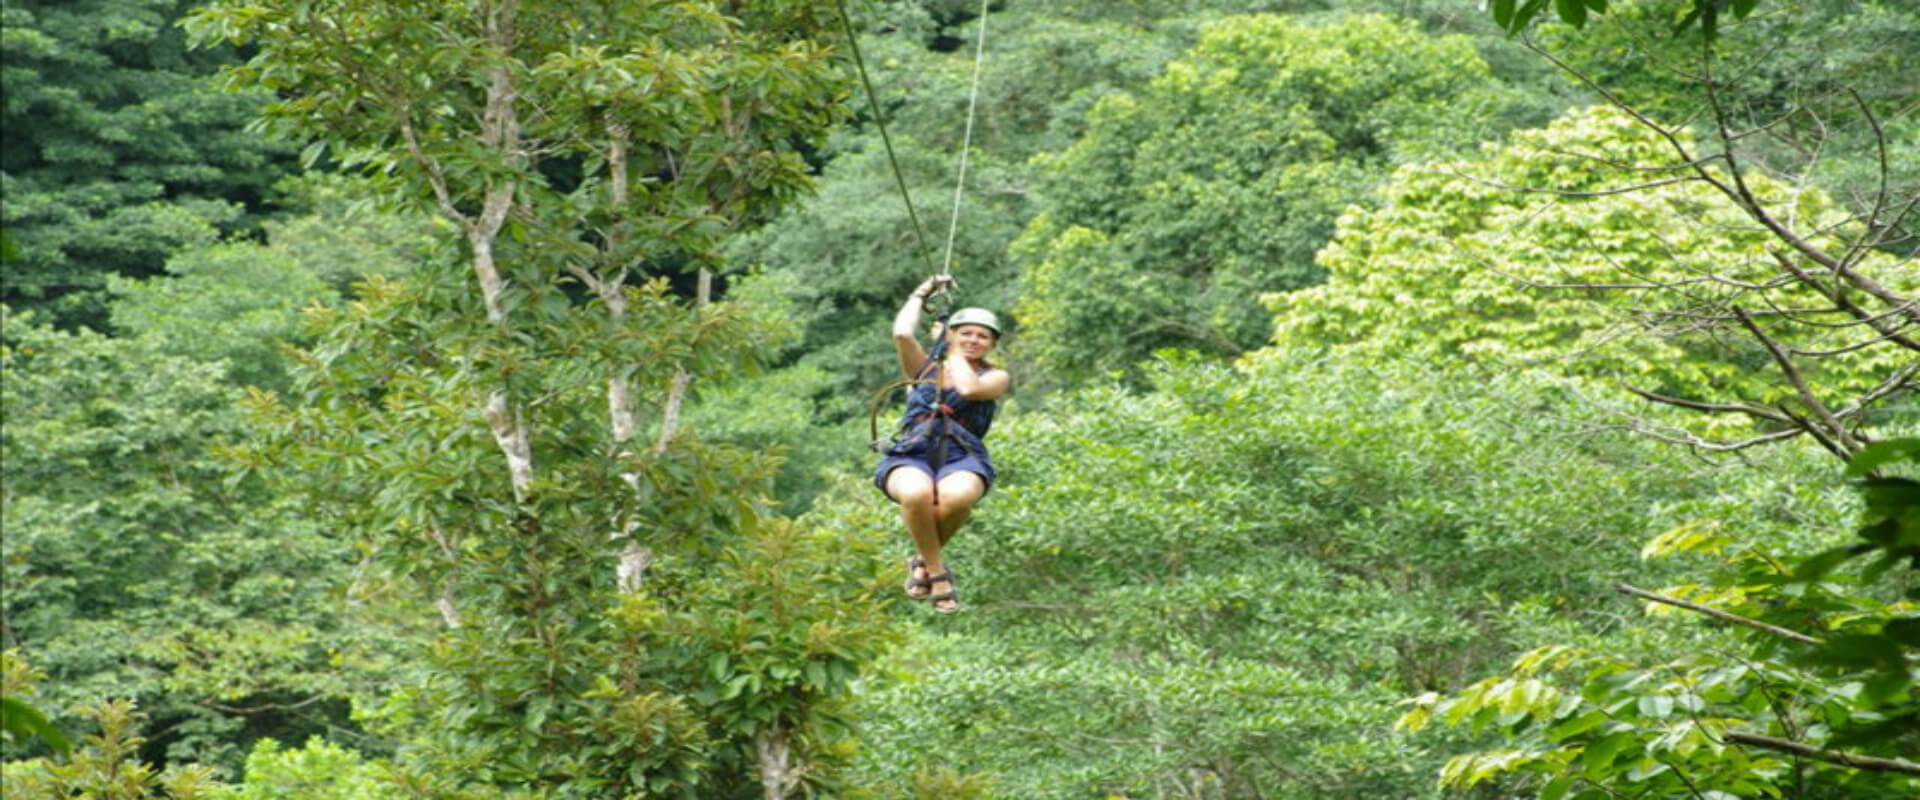 Drake Bay Canopy Tour | Costa Rica Jade Tours